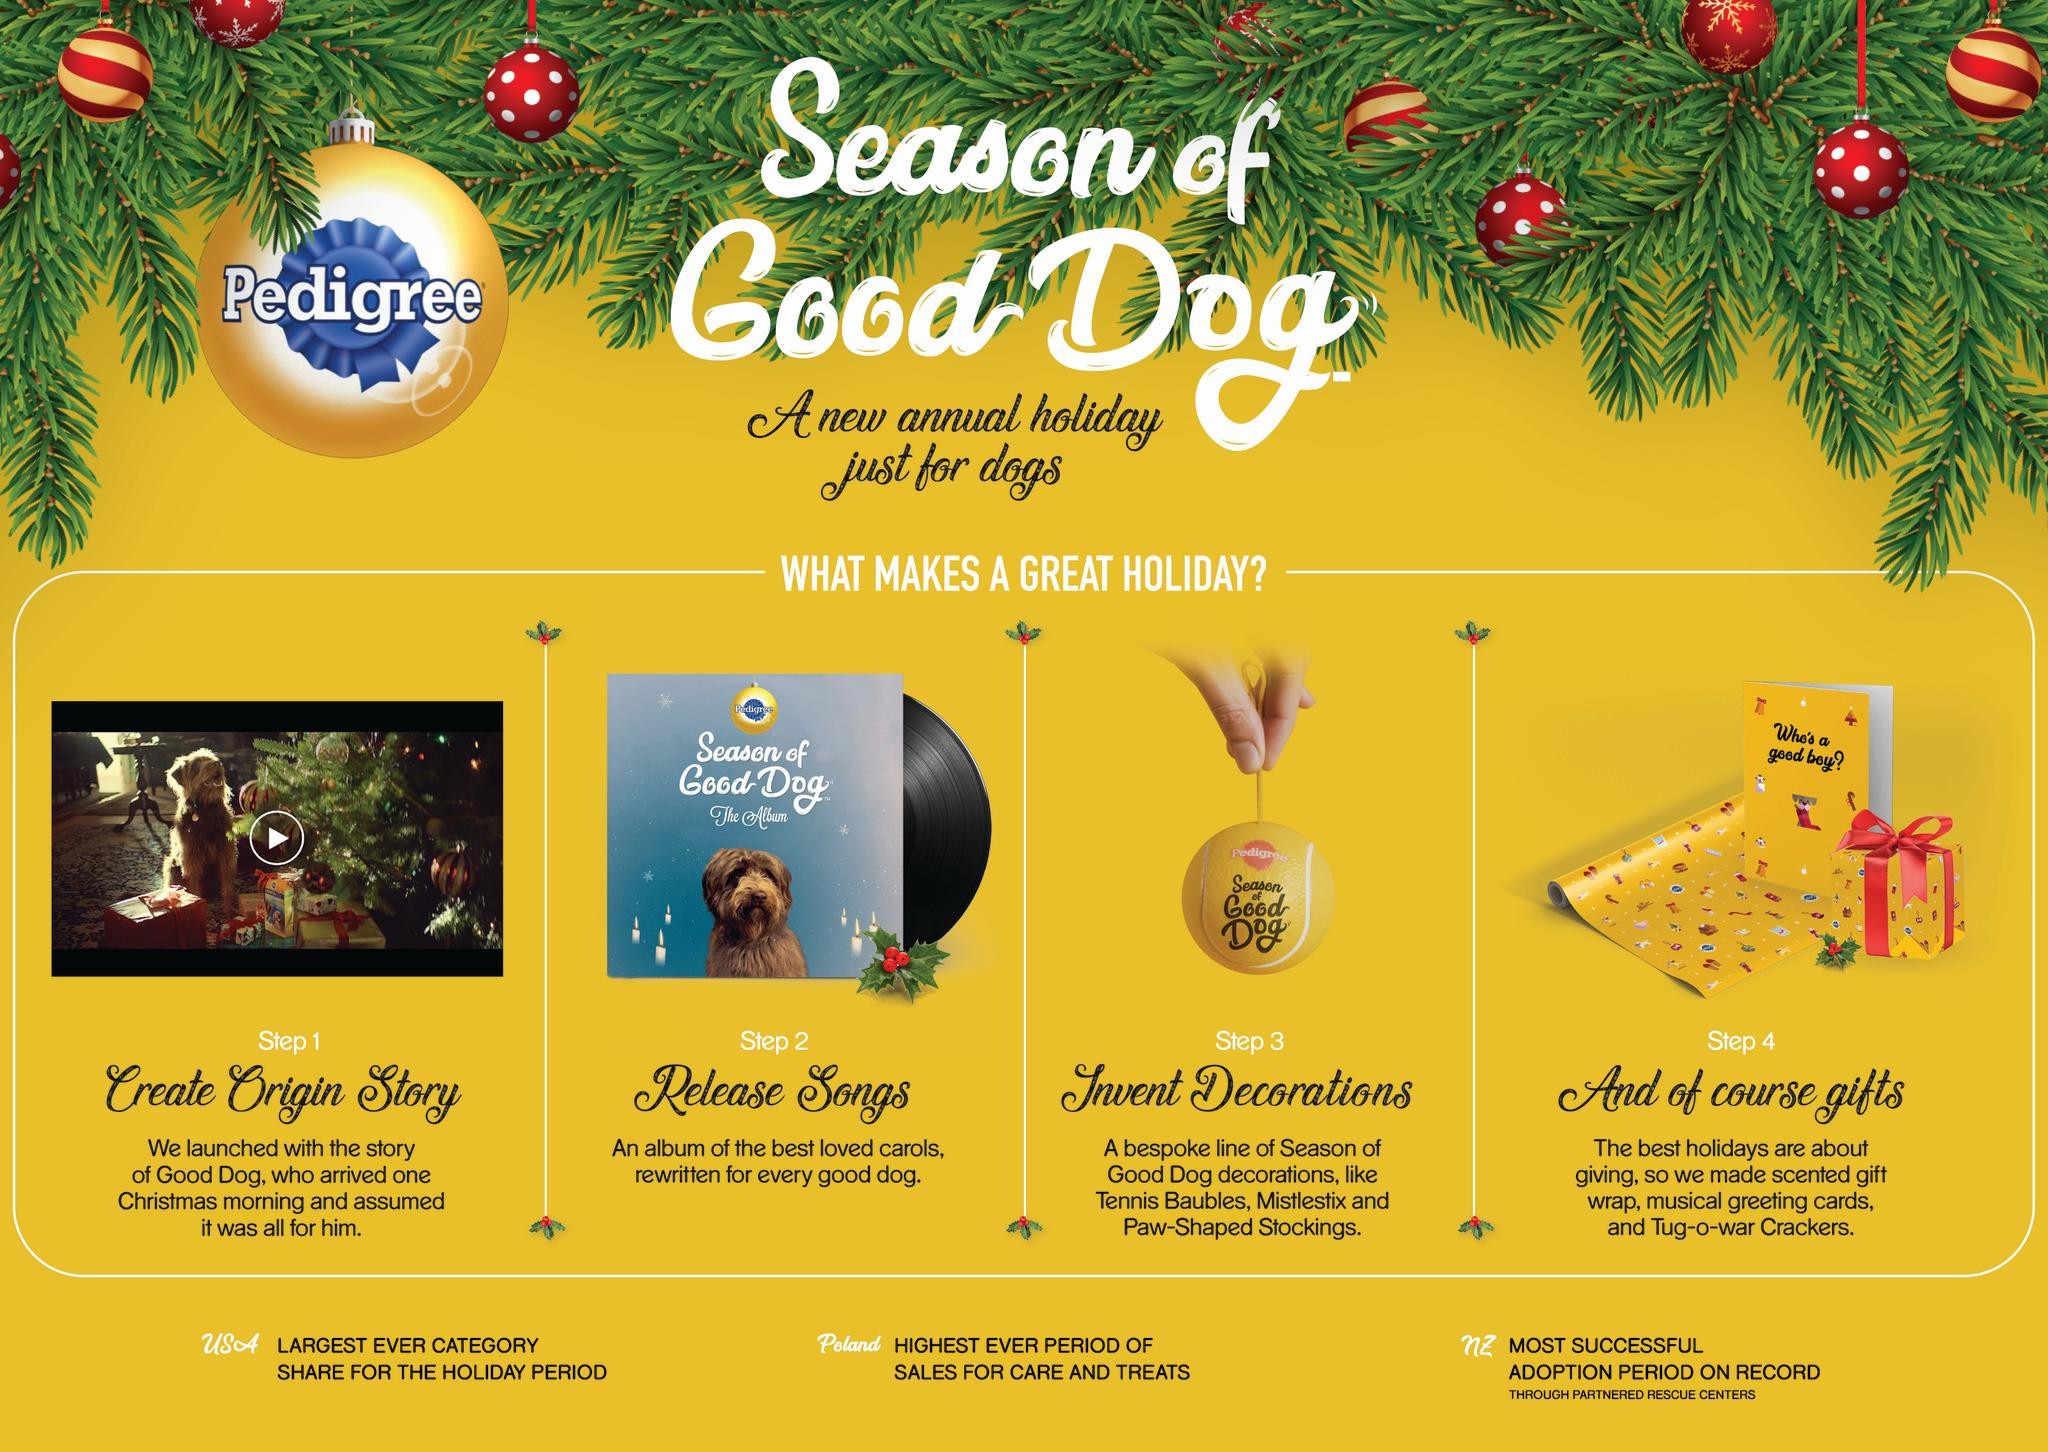 Season of Good Dog